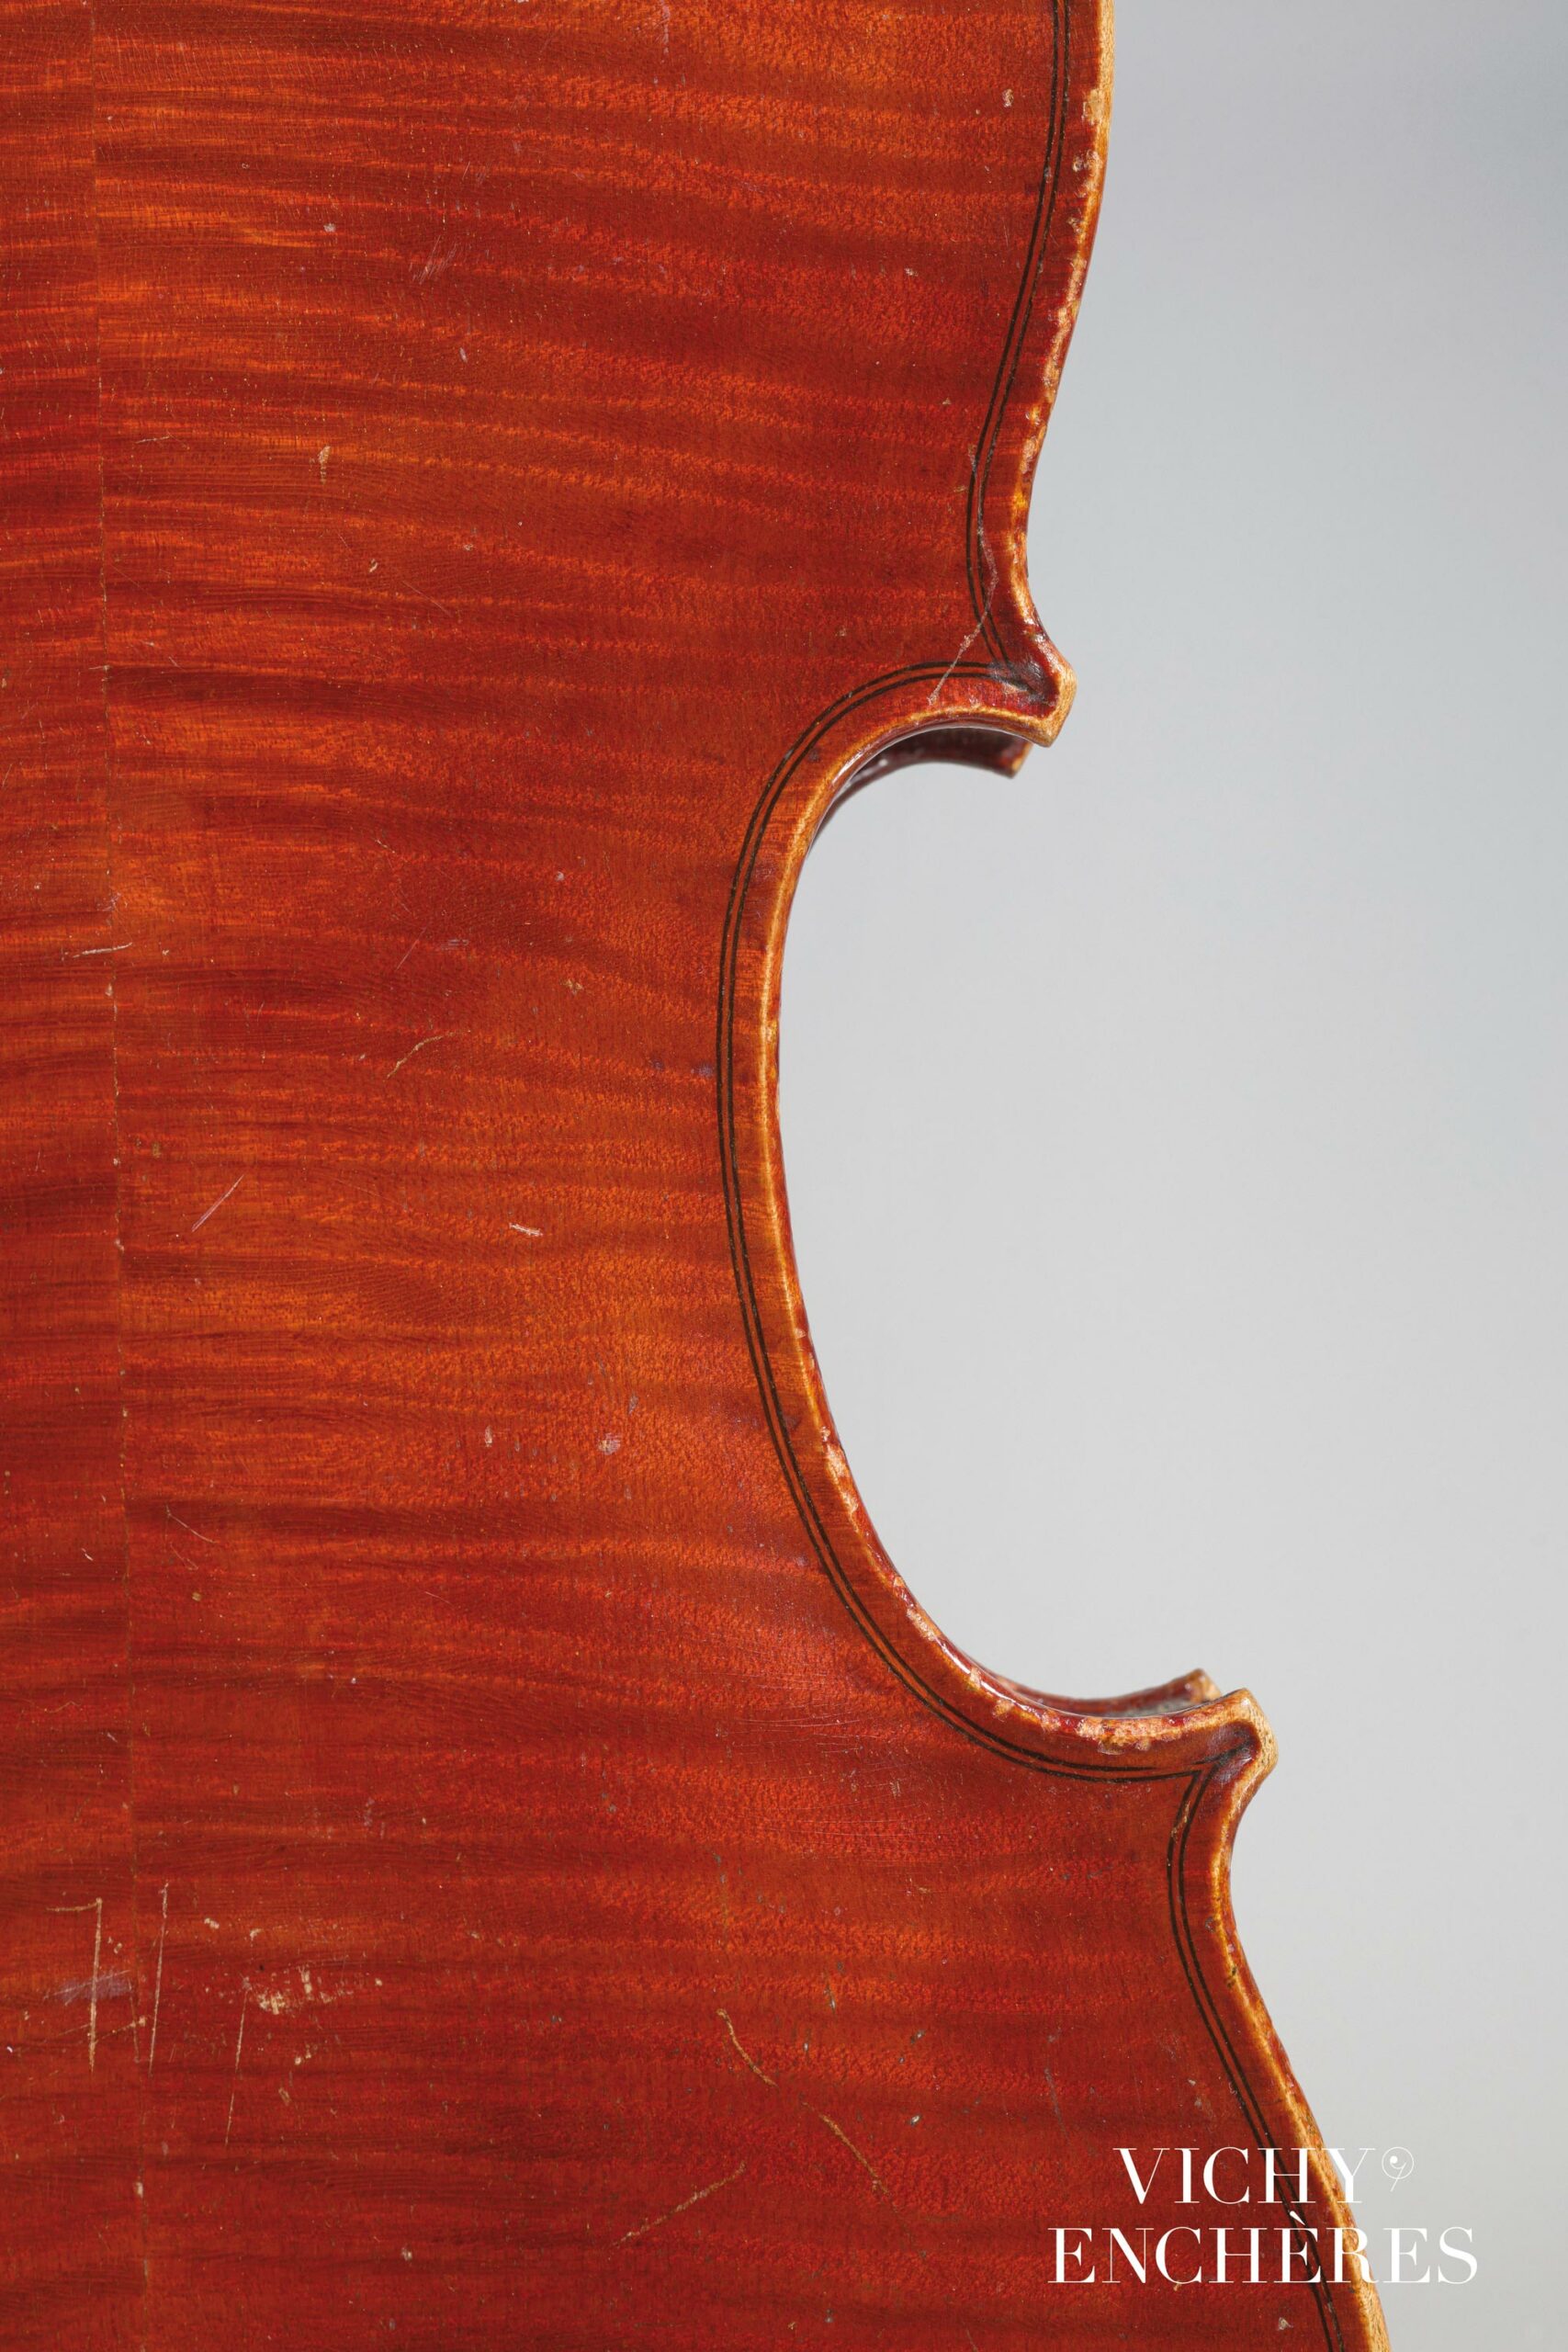 Joli violon de Riccardo GENOVESE Instrument mis en vente par Vichy Enchères le 1 juin 2023 © C. Darbelet